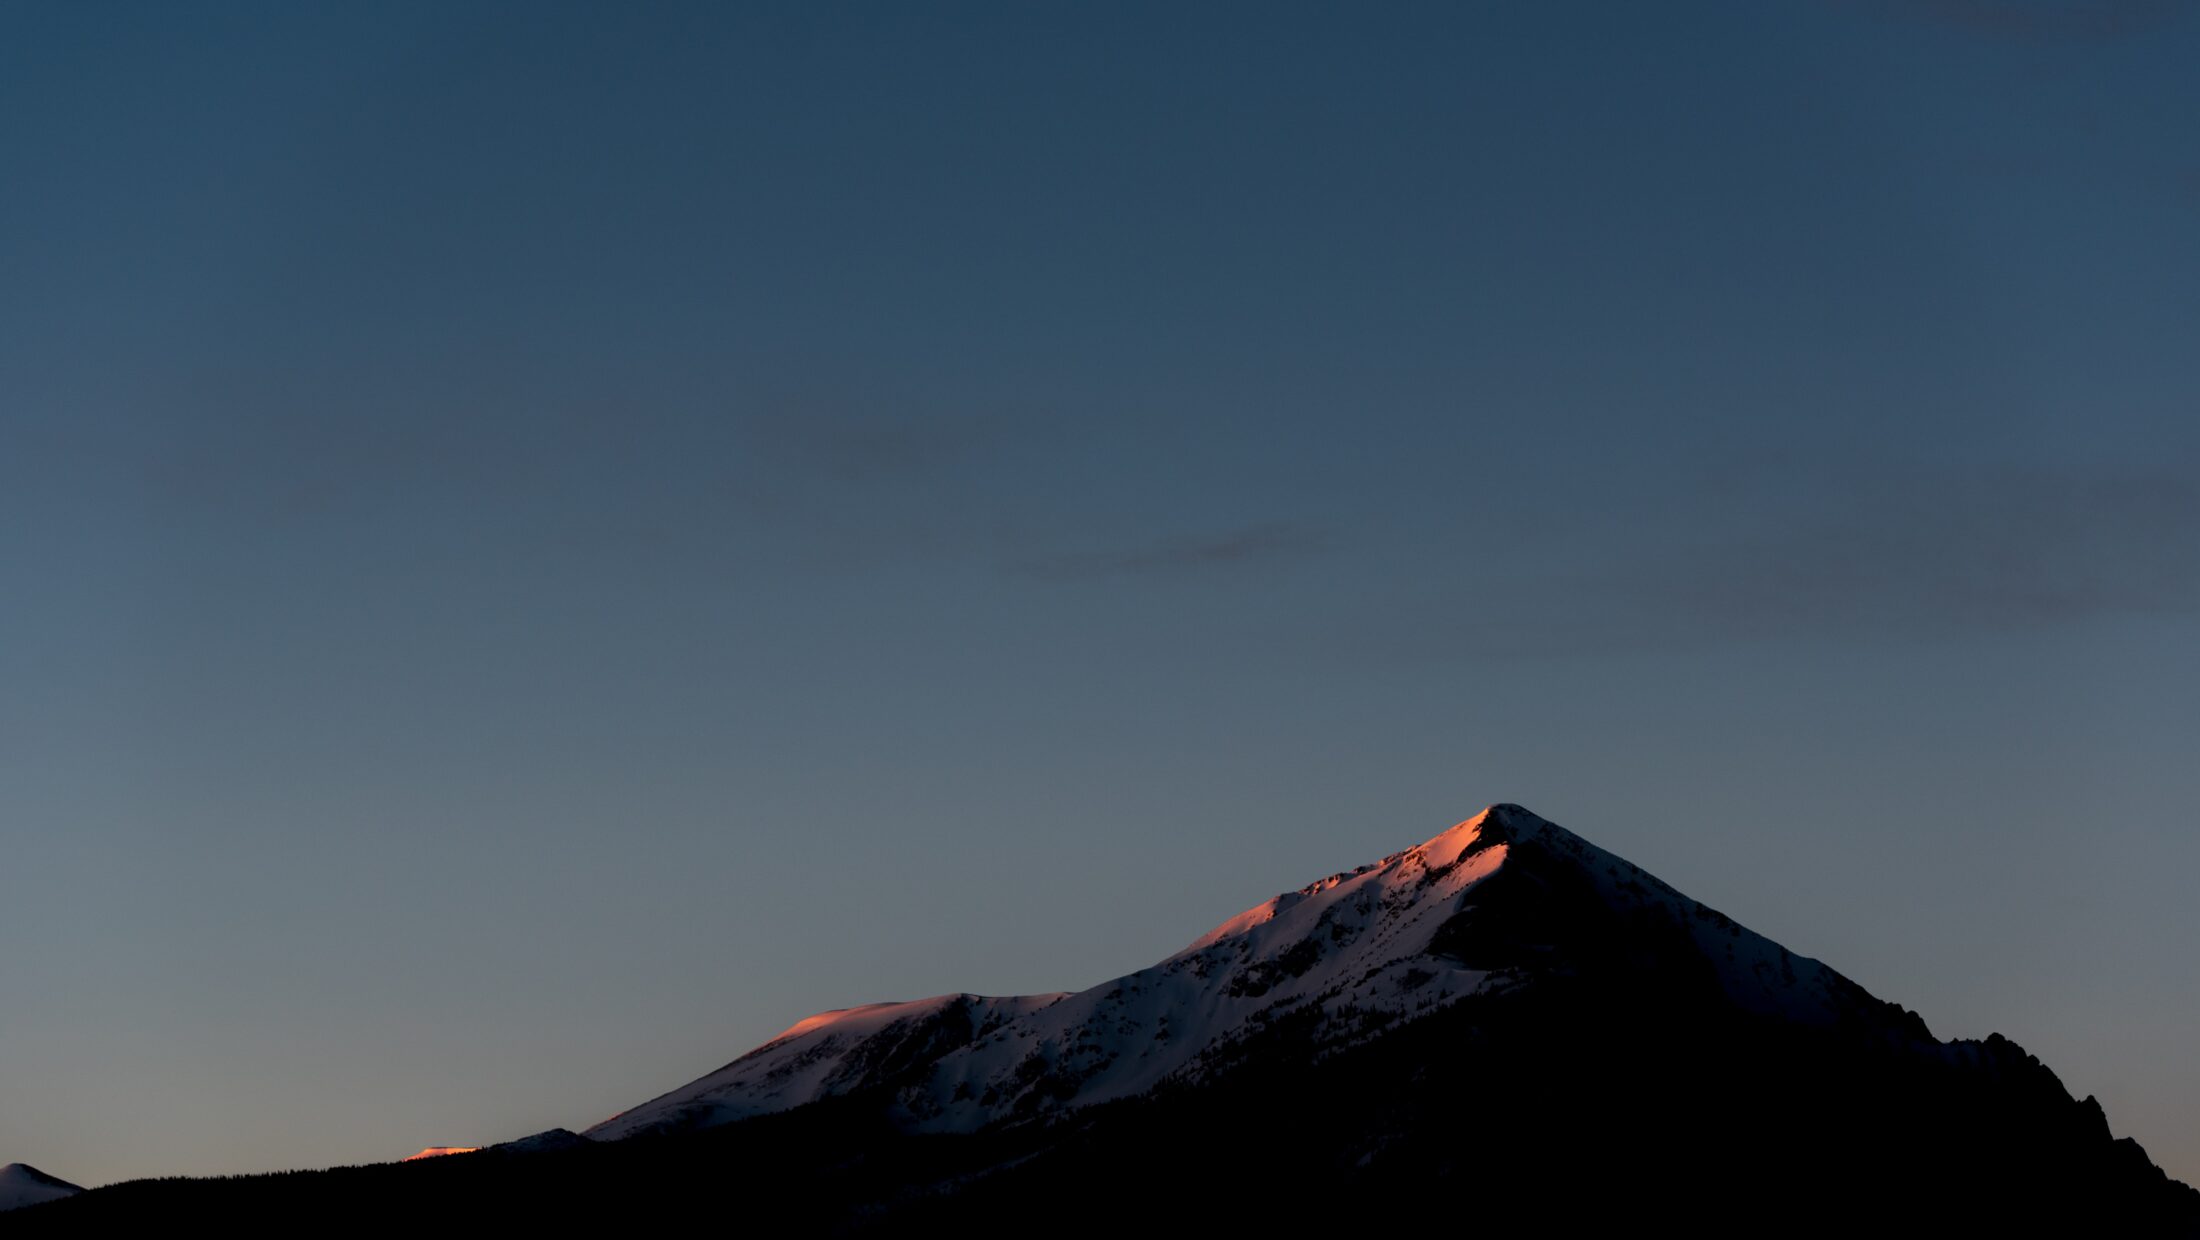 Silverthorne peak at dusk. Photo by Nathan Anderson via Unsplash.